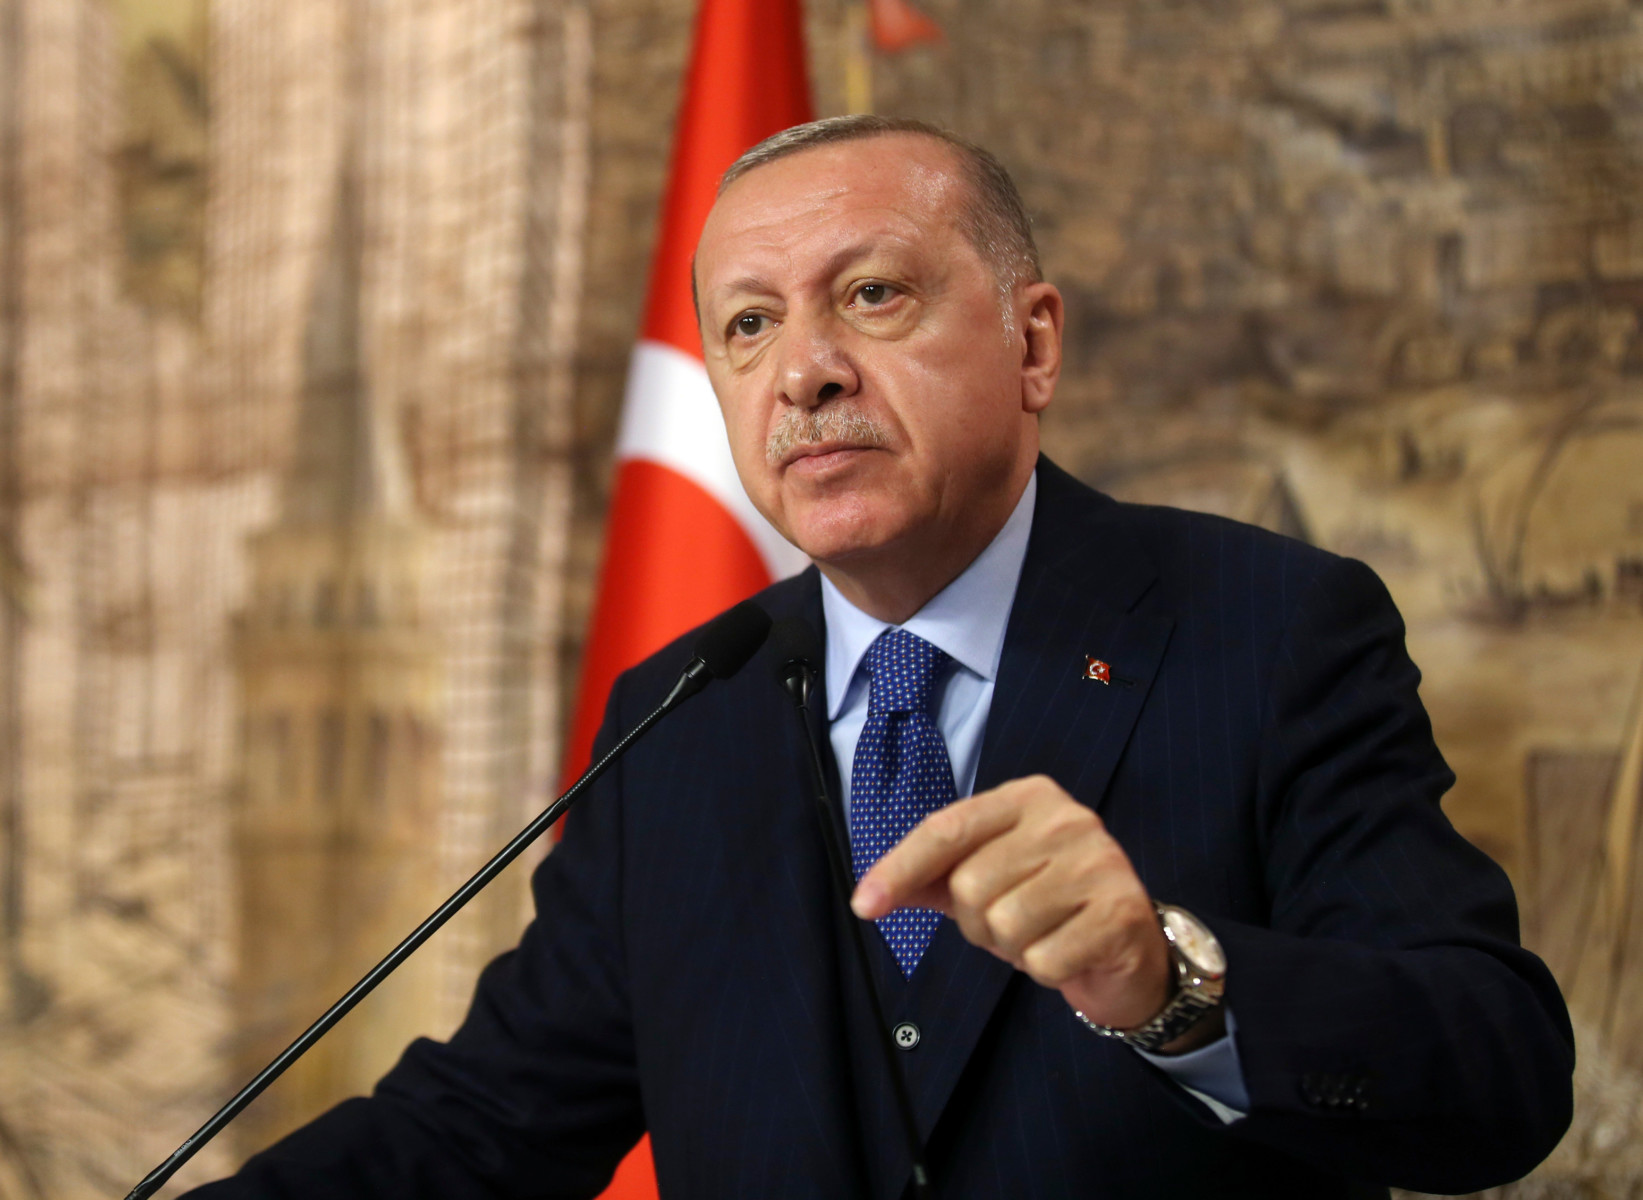 Turkeys president Recep Tayyip Erdogan was also tricked by the jokers